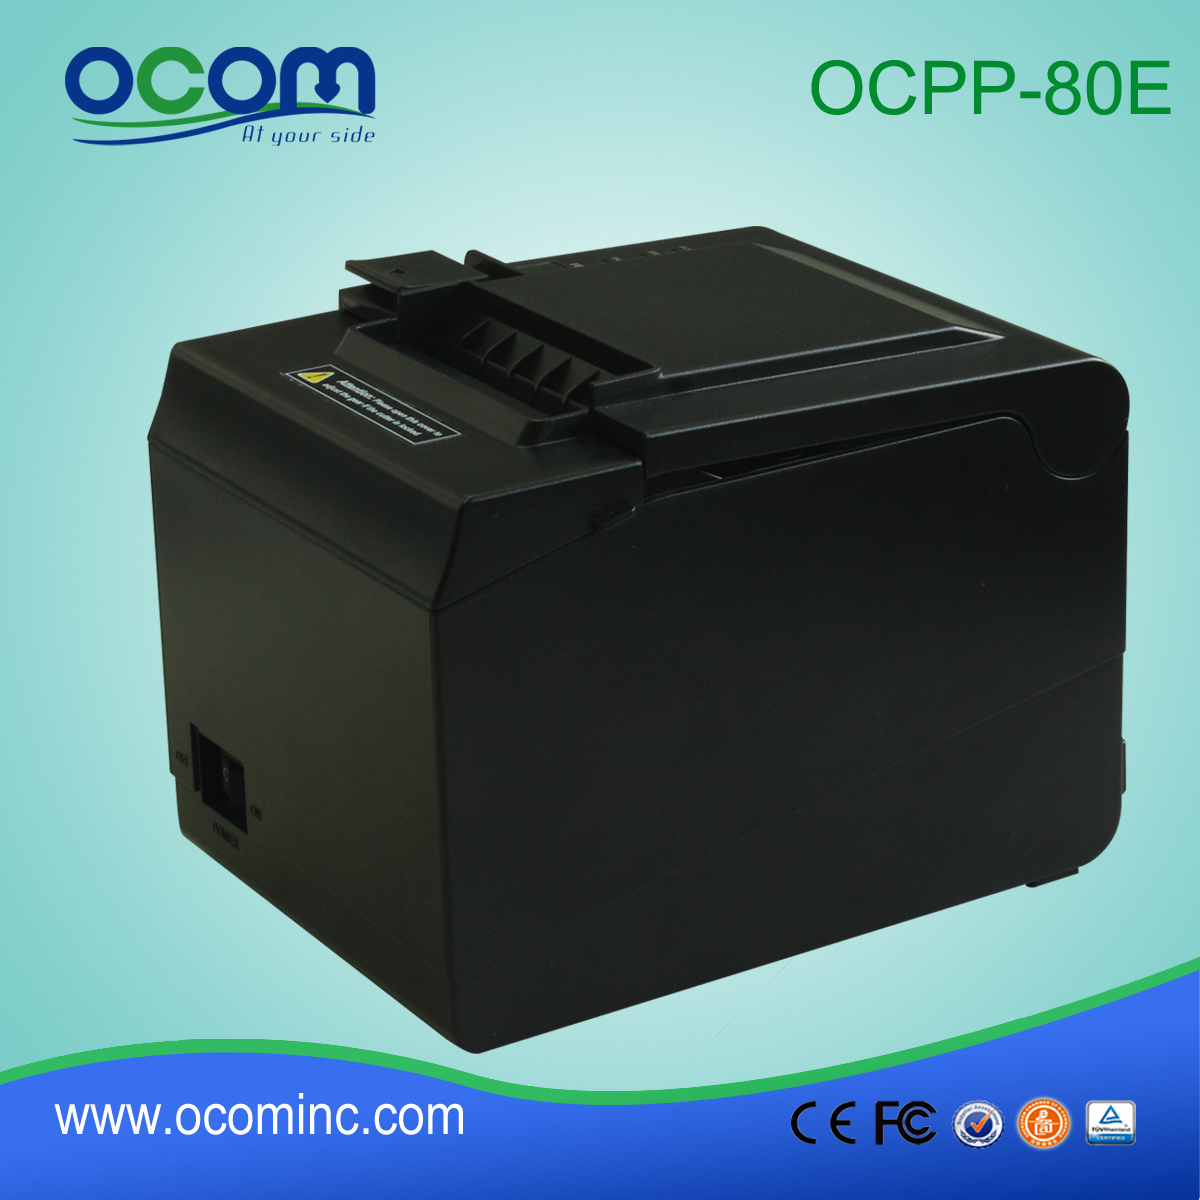 OCPP-80E --- China Fabrikqualität Android Thermodrucker